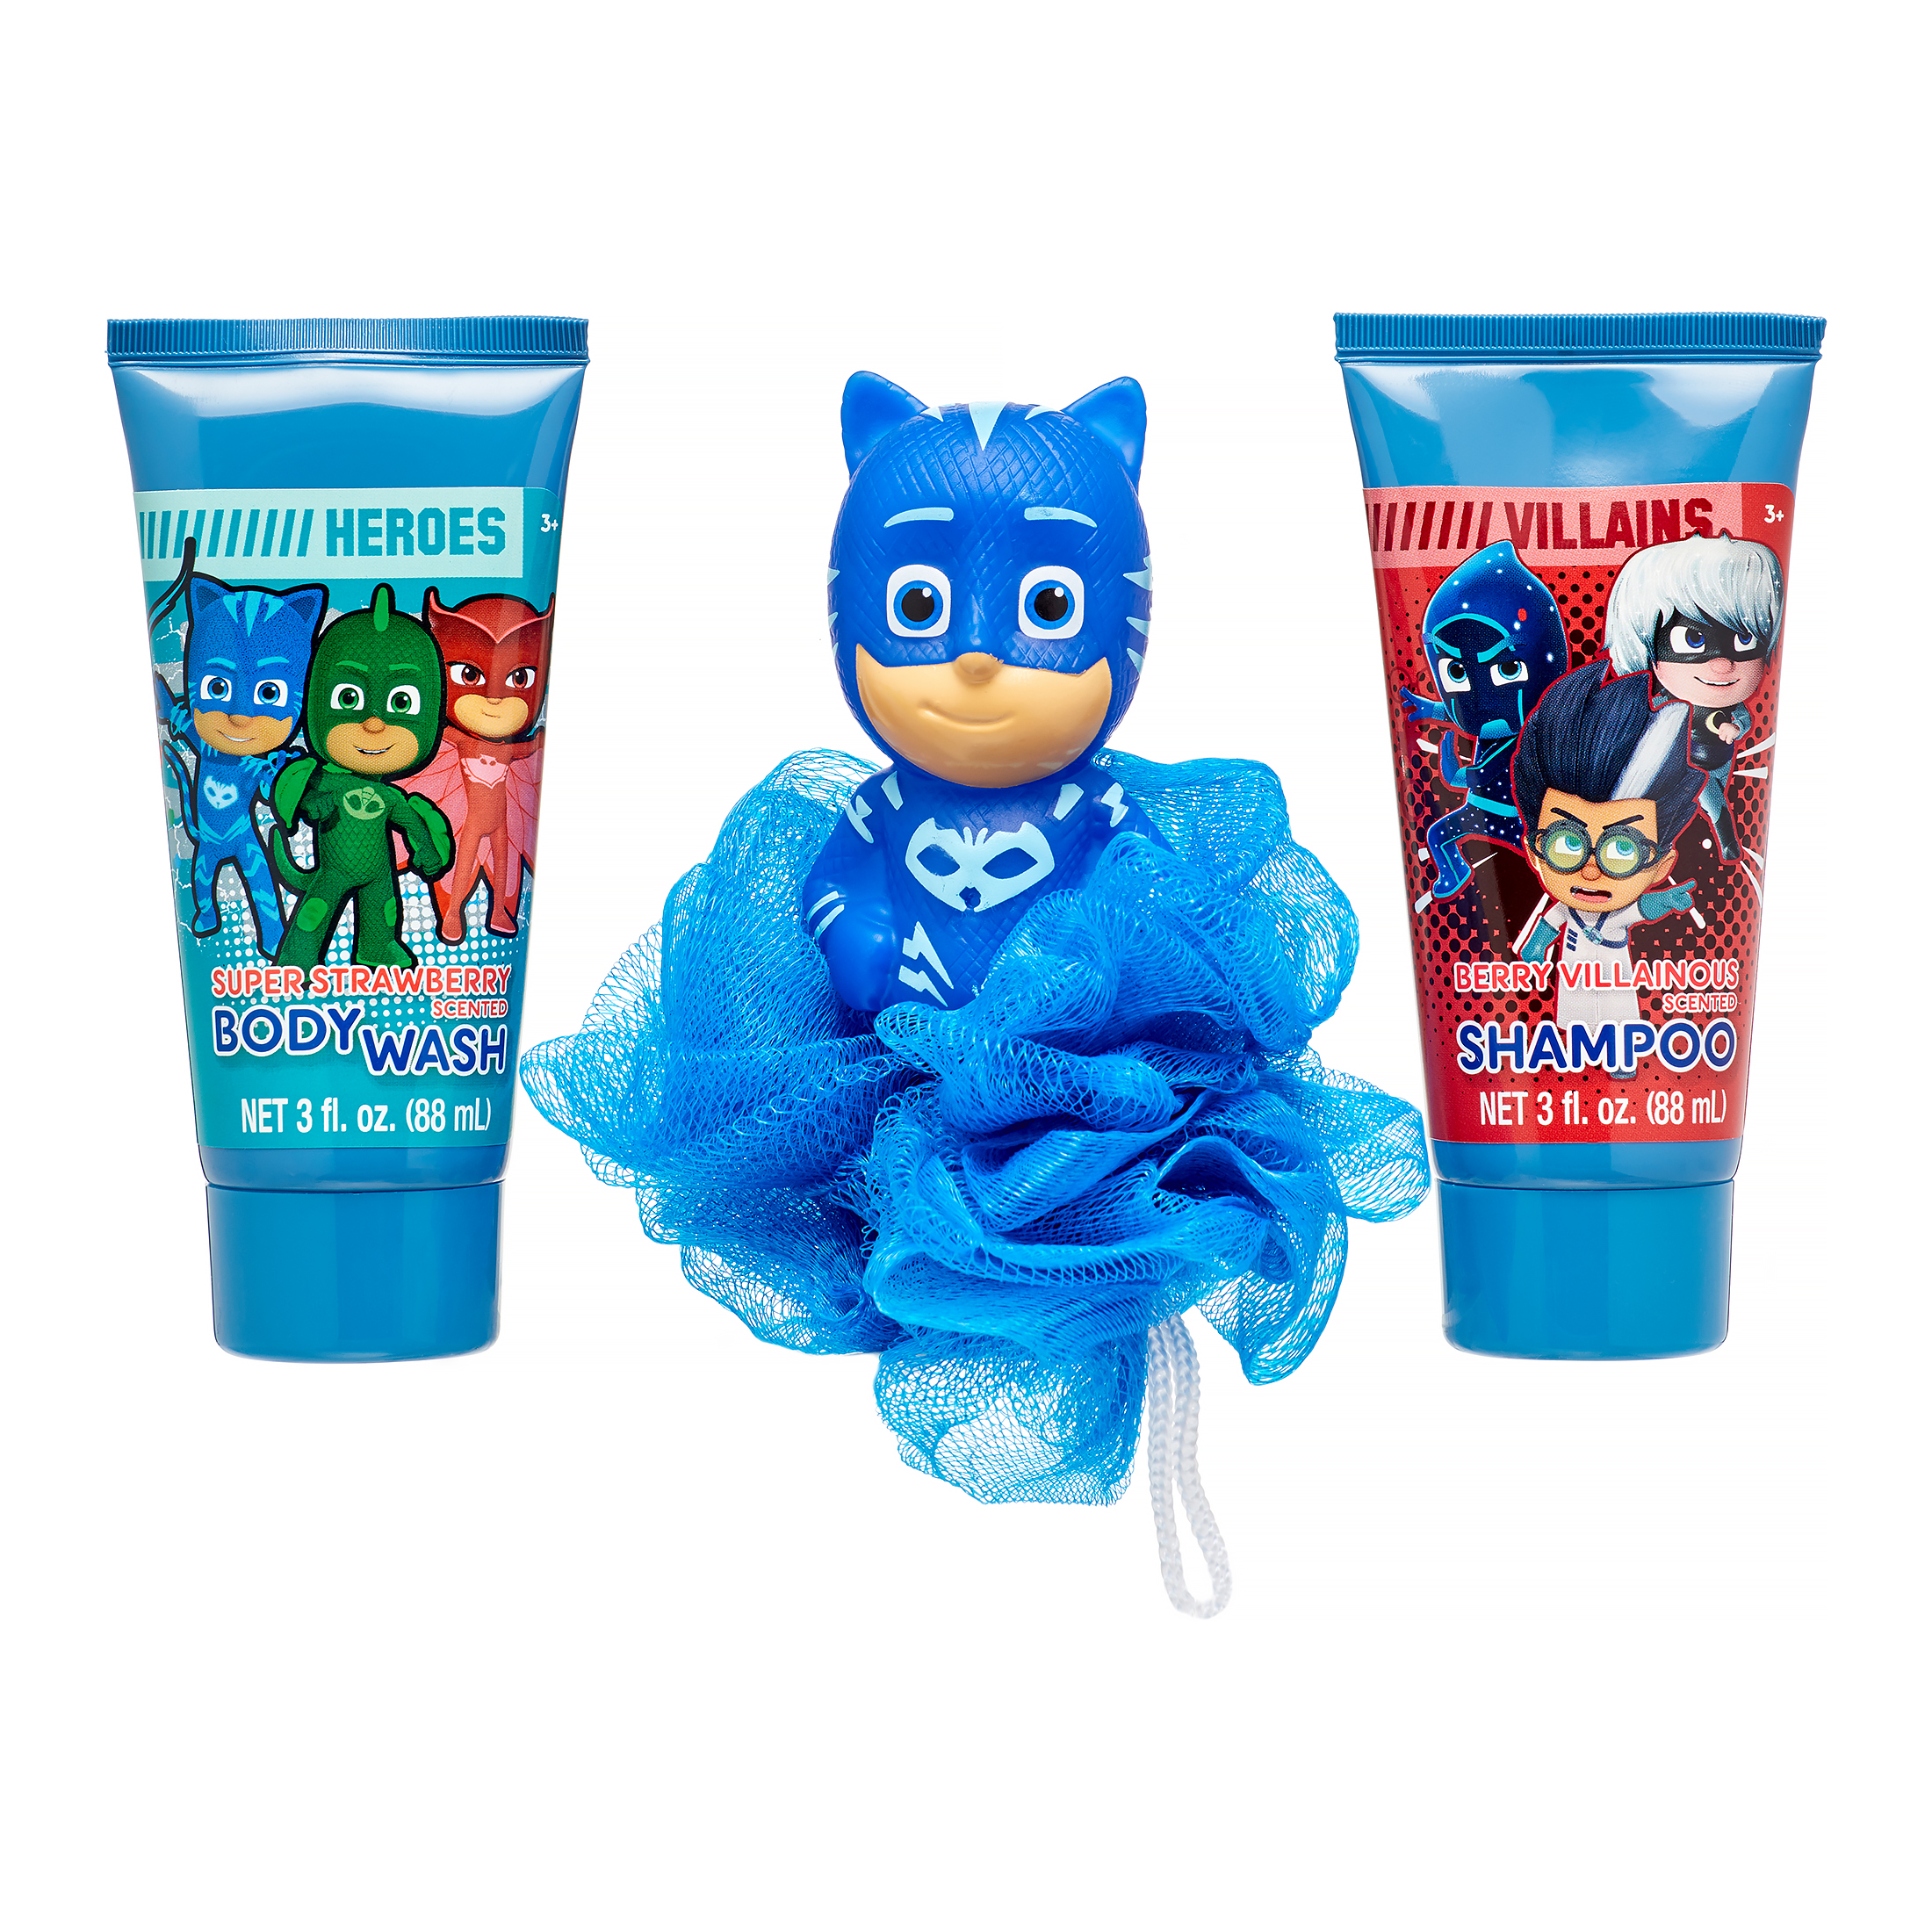 PJ Masks 4-Piece Soap and Scrub Body Wash and Shampoo Set - image 2 of 5